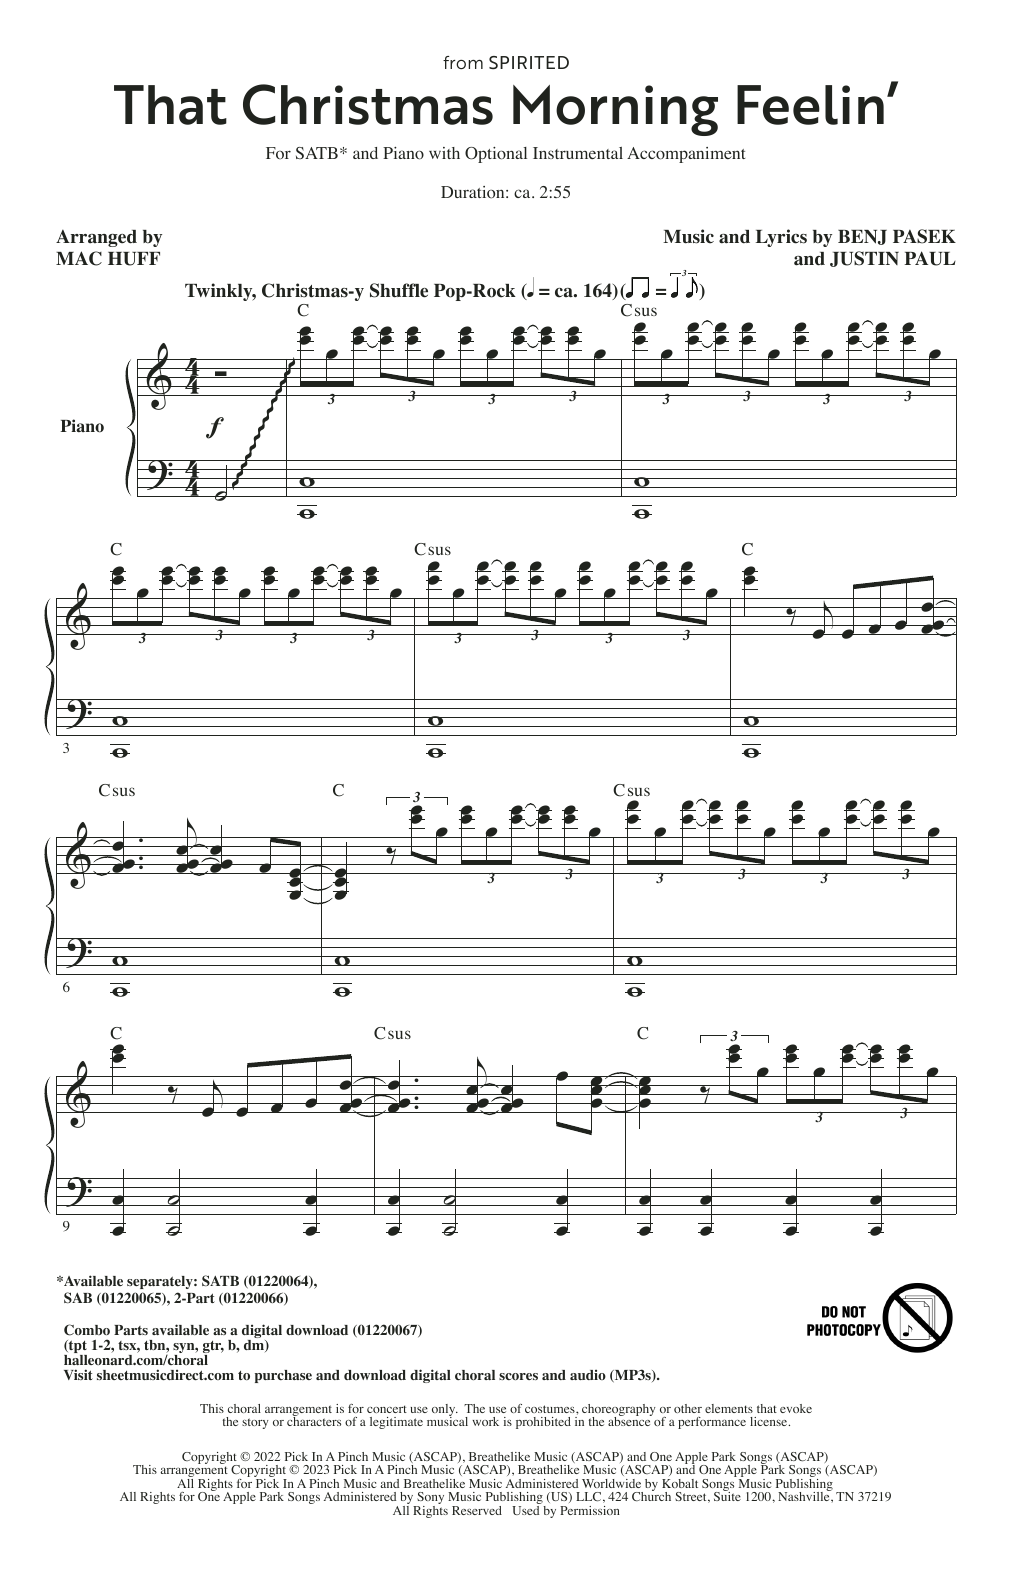 Pasek & Paul That Christmas Morning Feelin' (from Spirited) (arr. Mac Huff) Sheet Music Notes & Chords for SAB Choir - Download or Print PDF